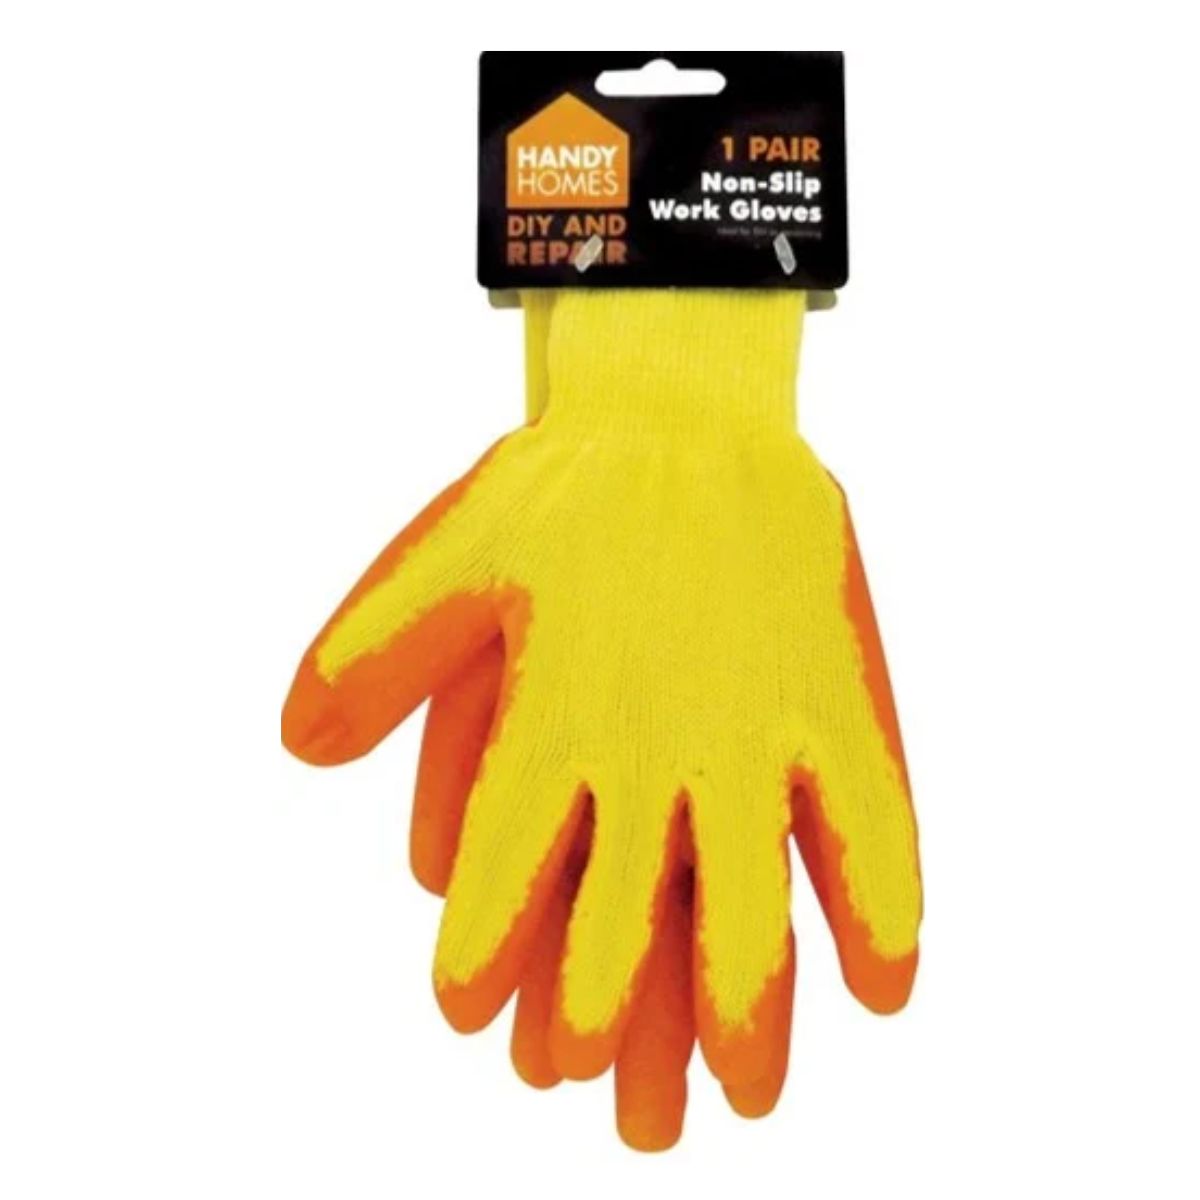 A pair of Handy Homes - Work Gloves Non-Slip yellow and orange work gloves.